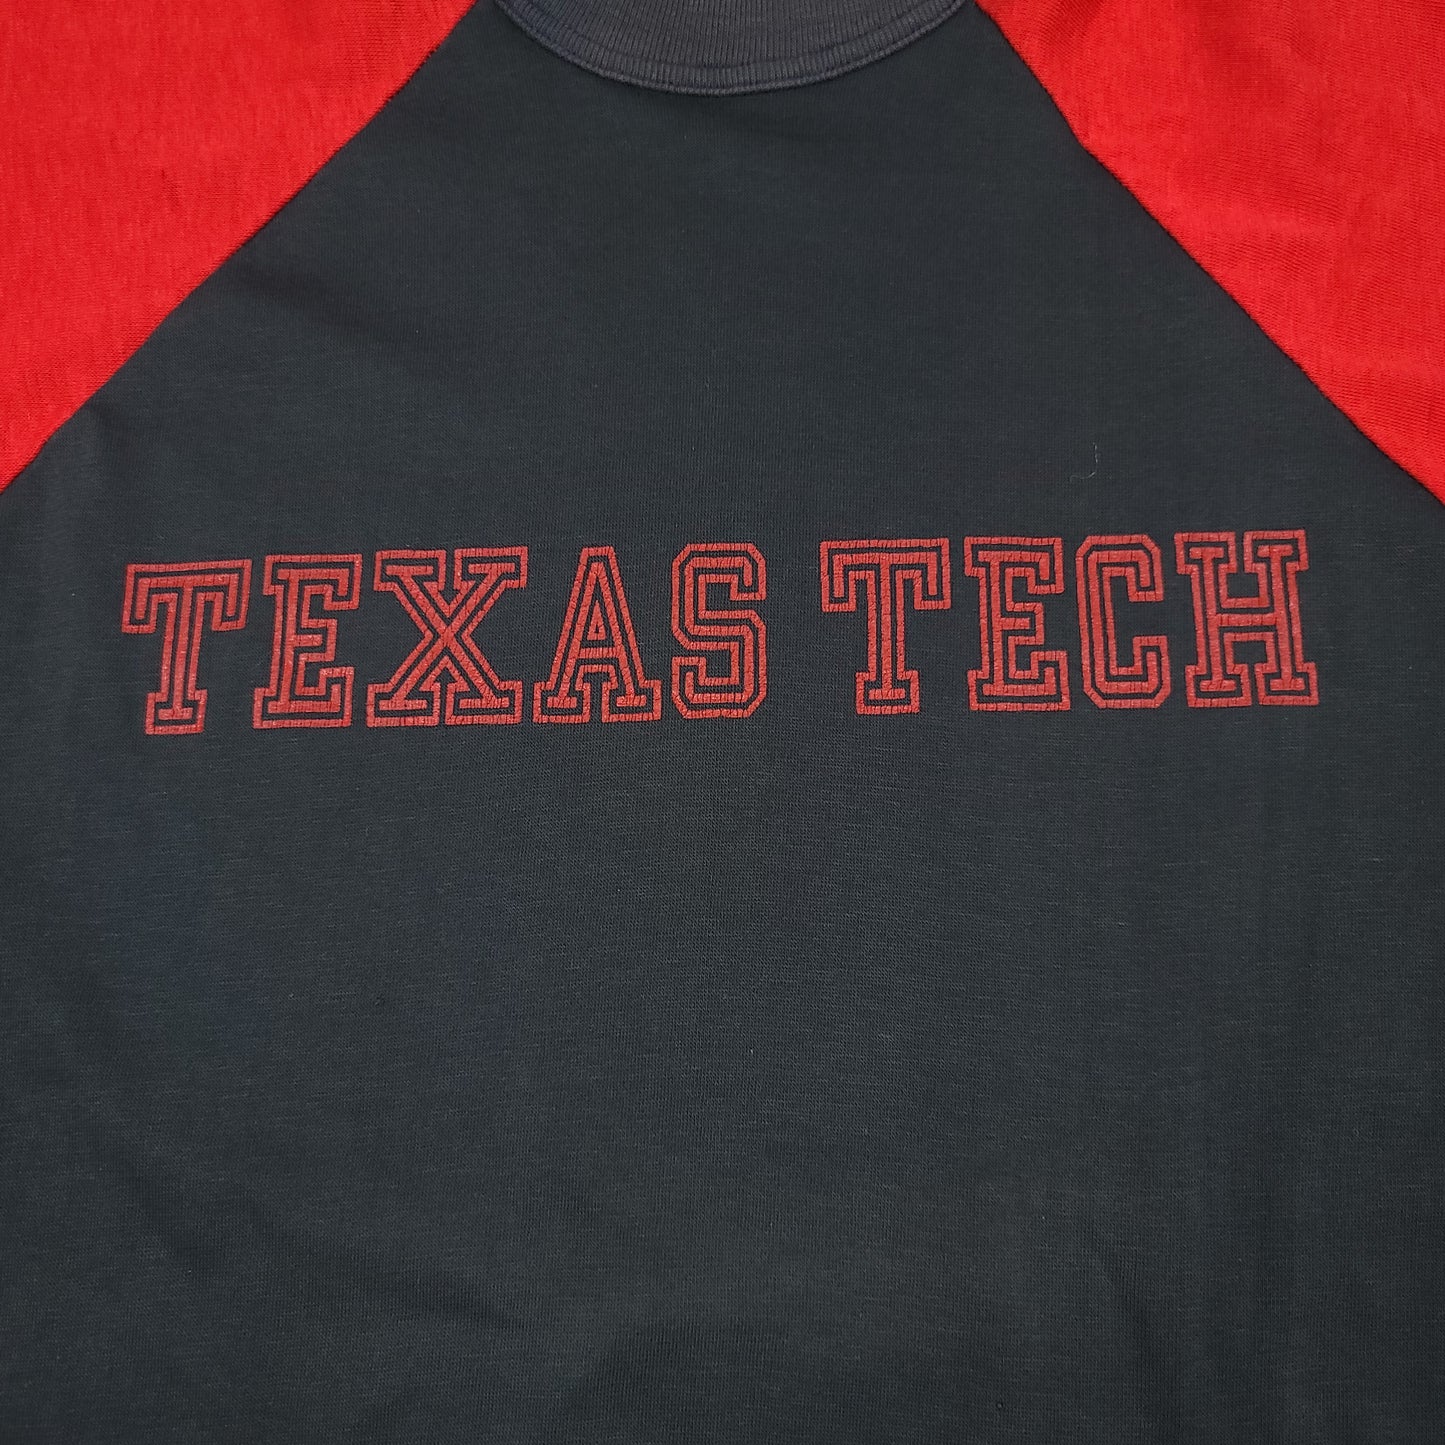 Vintage Texas Tech University Black & Red Color Block Shirt